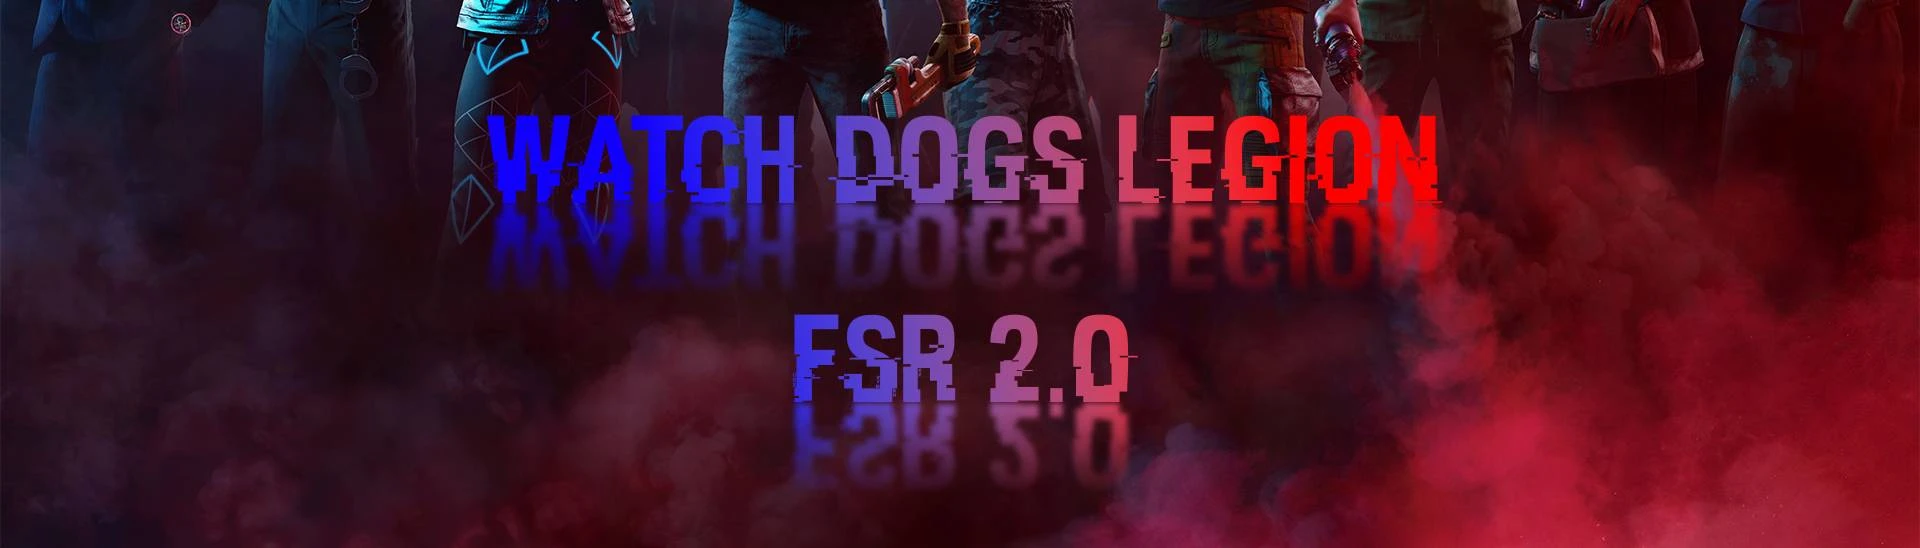 Watch Dogs: Legion #2 - 10.28. 